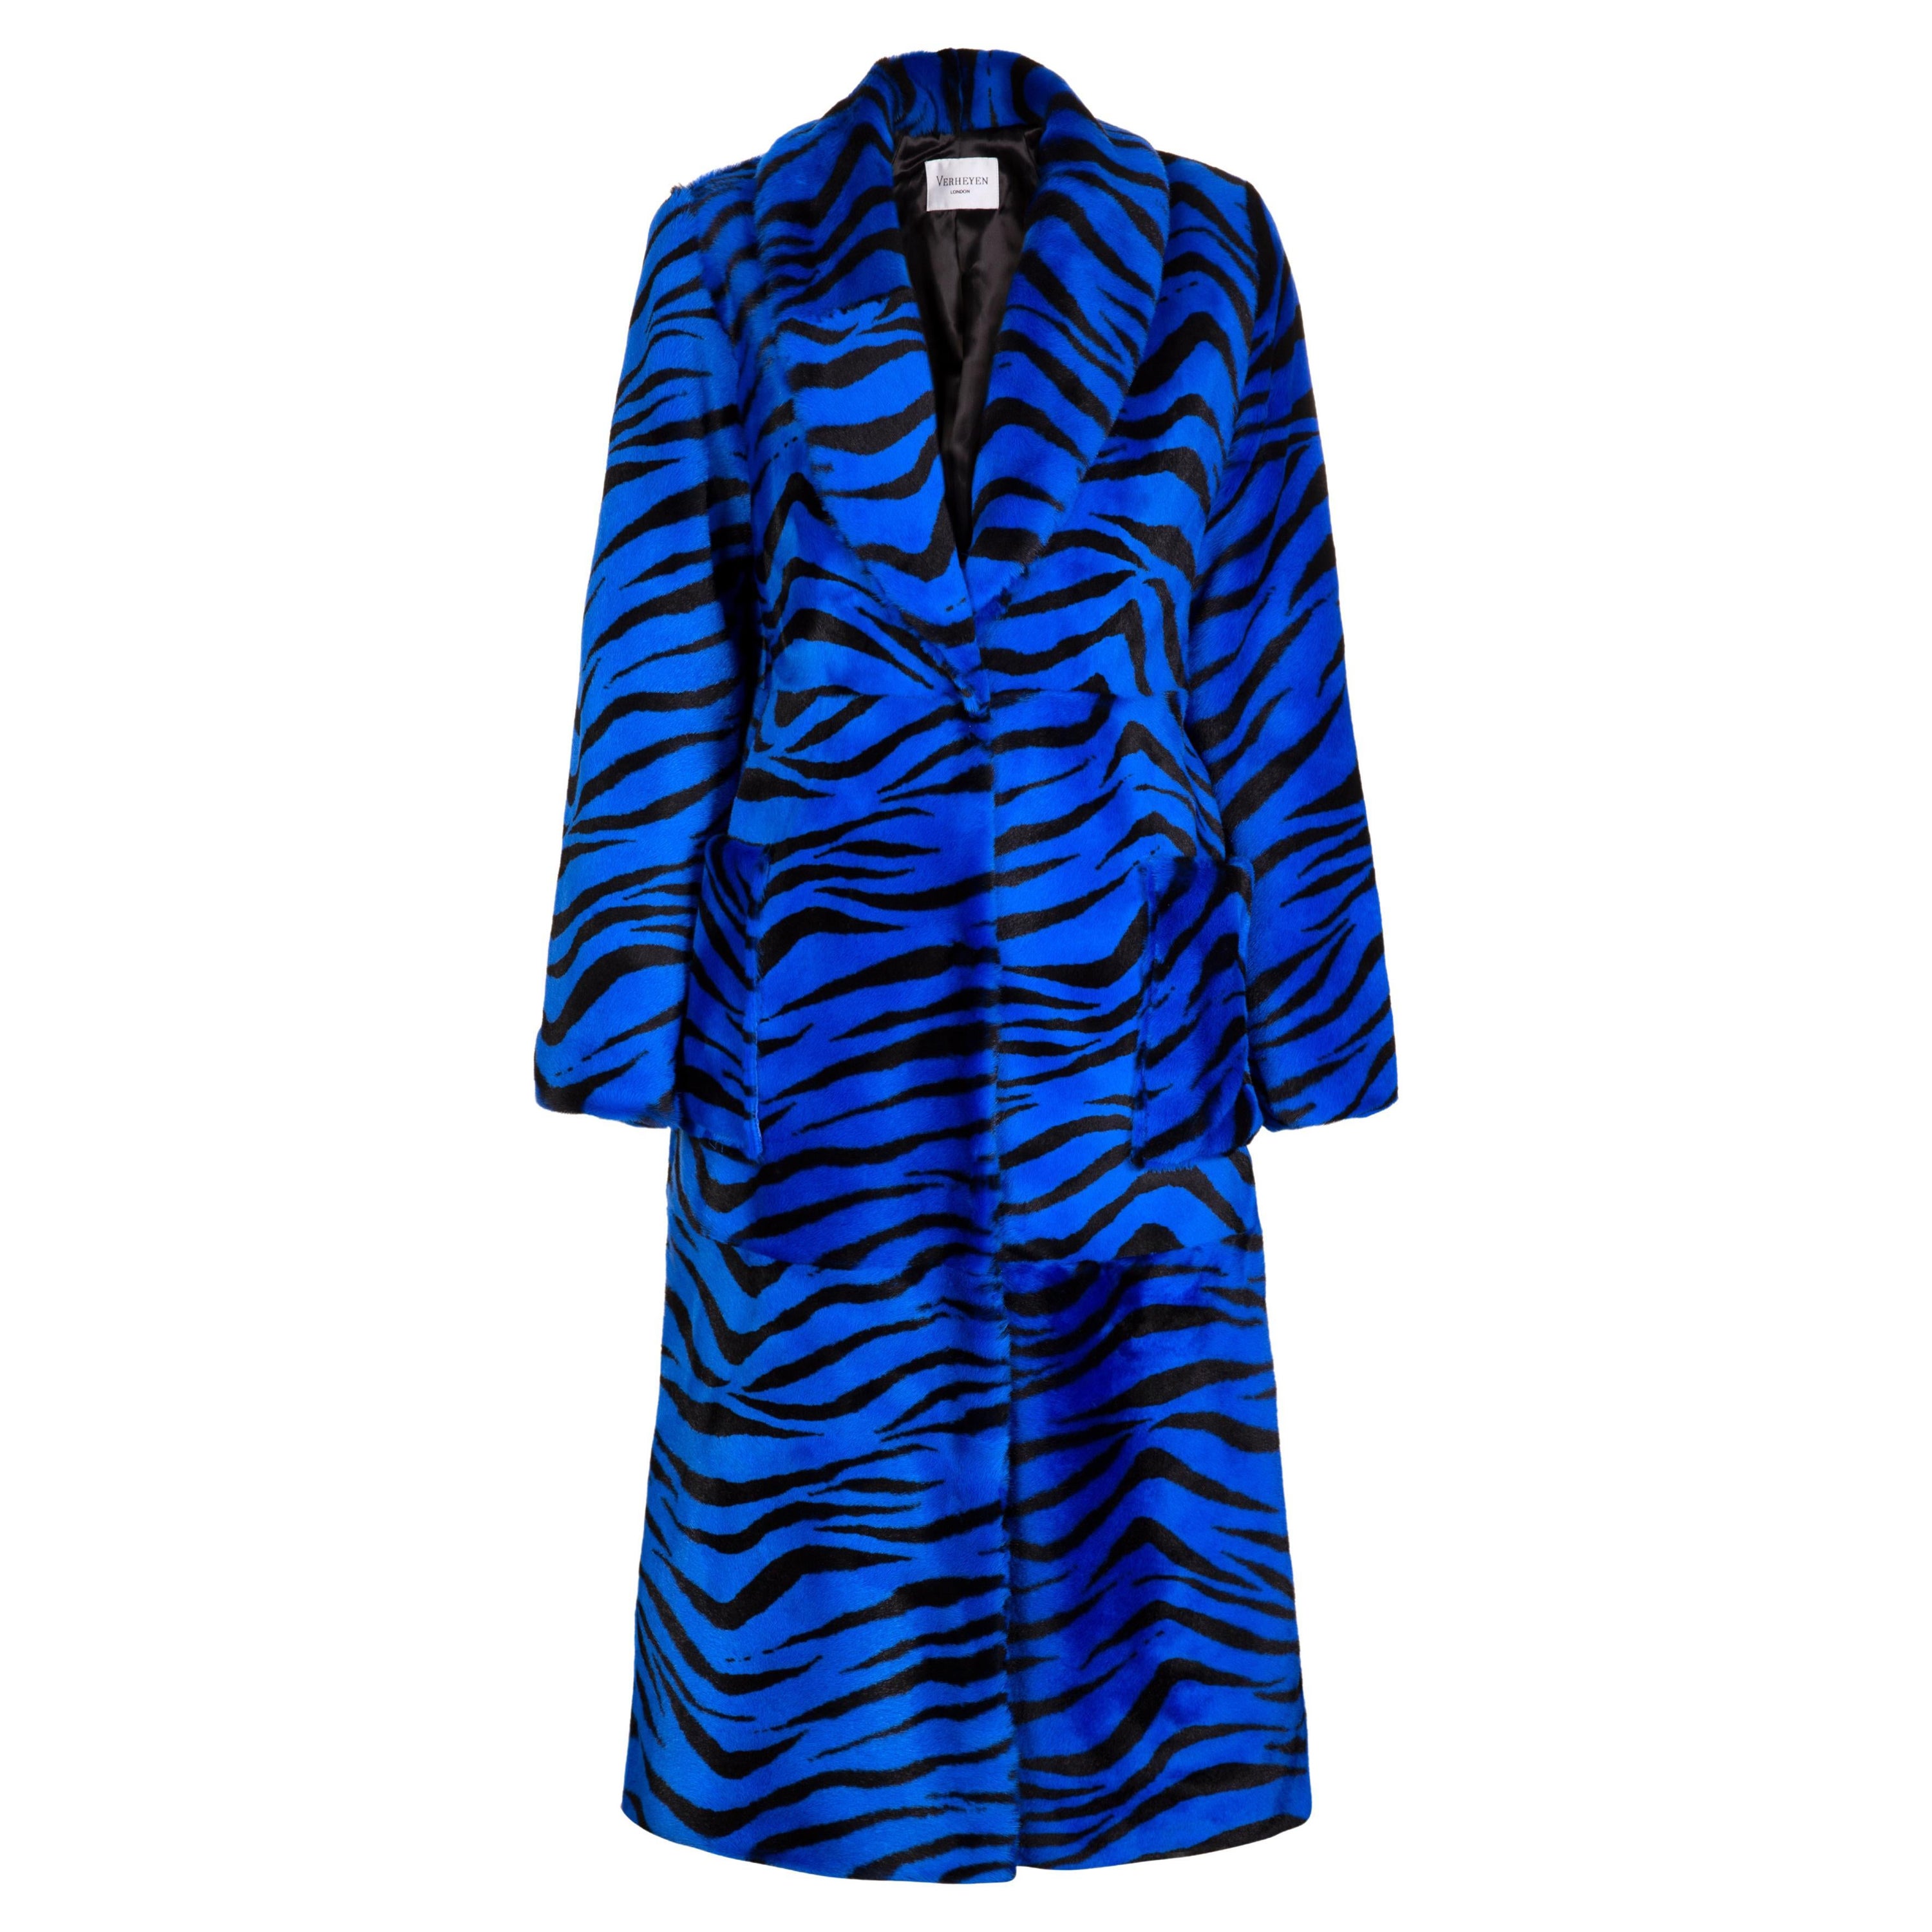 Verheyen London Shearling Coat in Blue Zebra Print size uk 8-10 For Sale